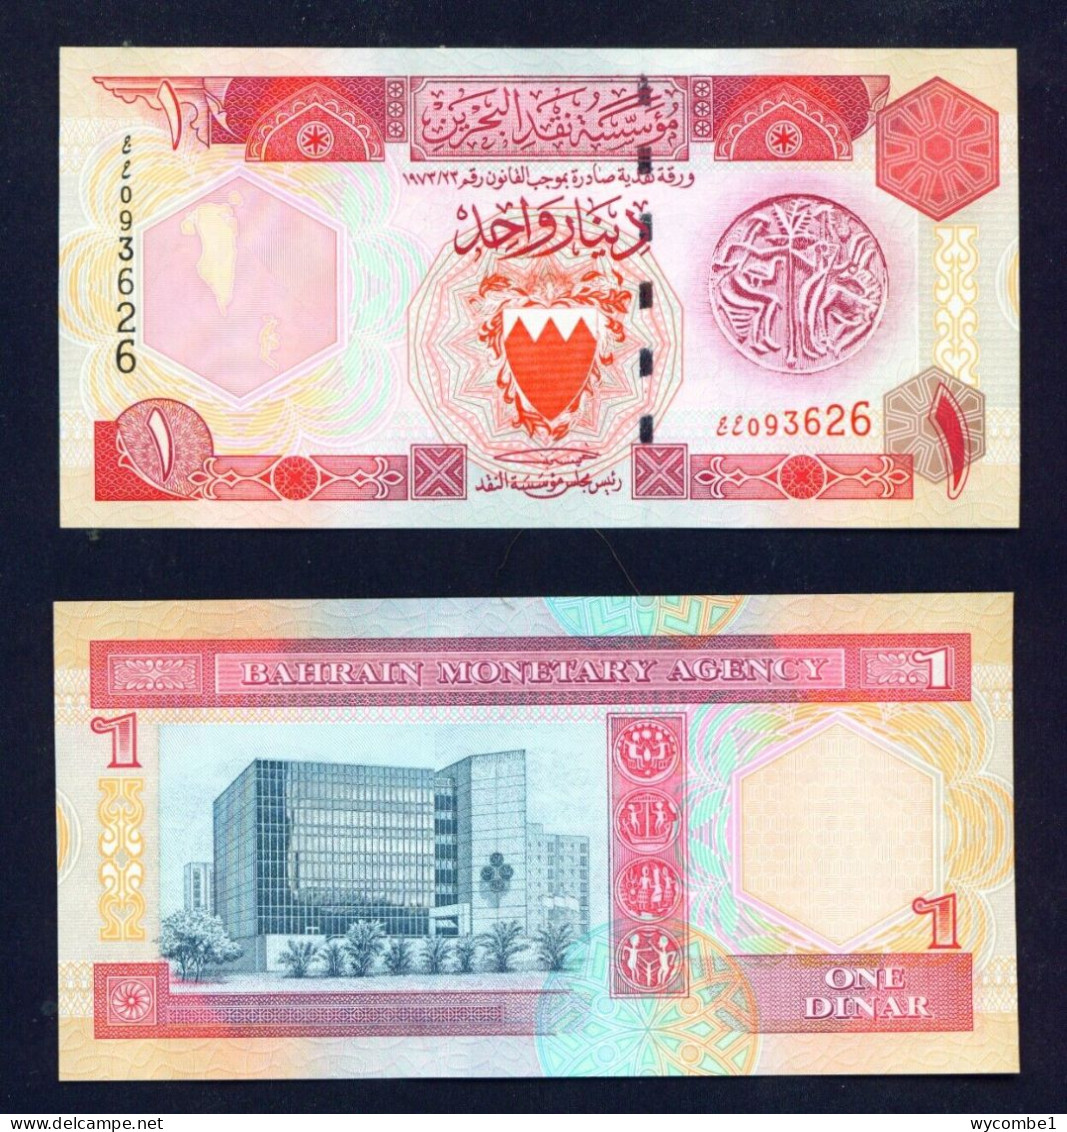 BAHRAIN -  1973 1 Dinar UNC Banknote - Bahrein